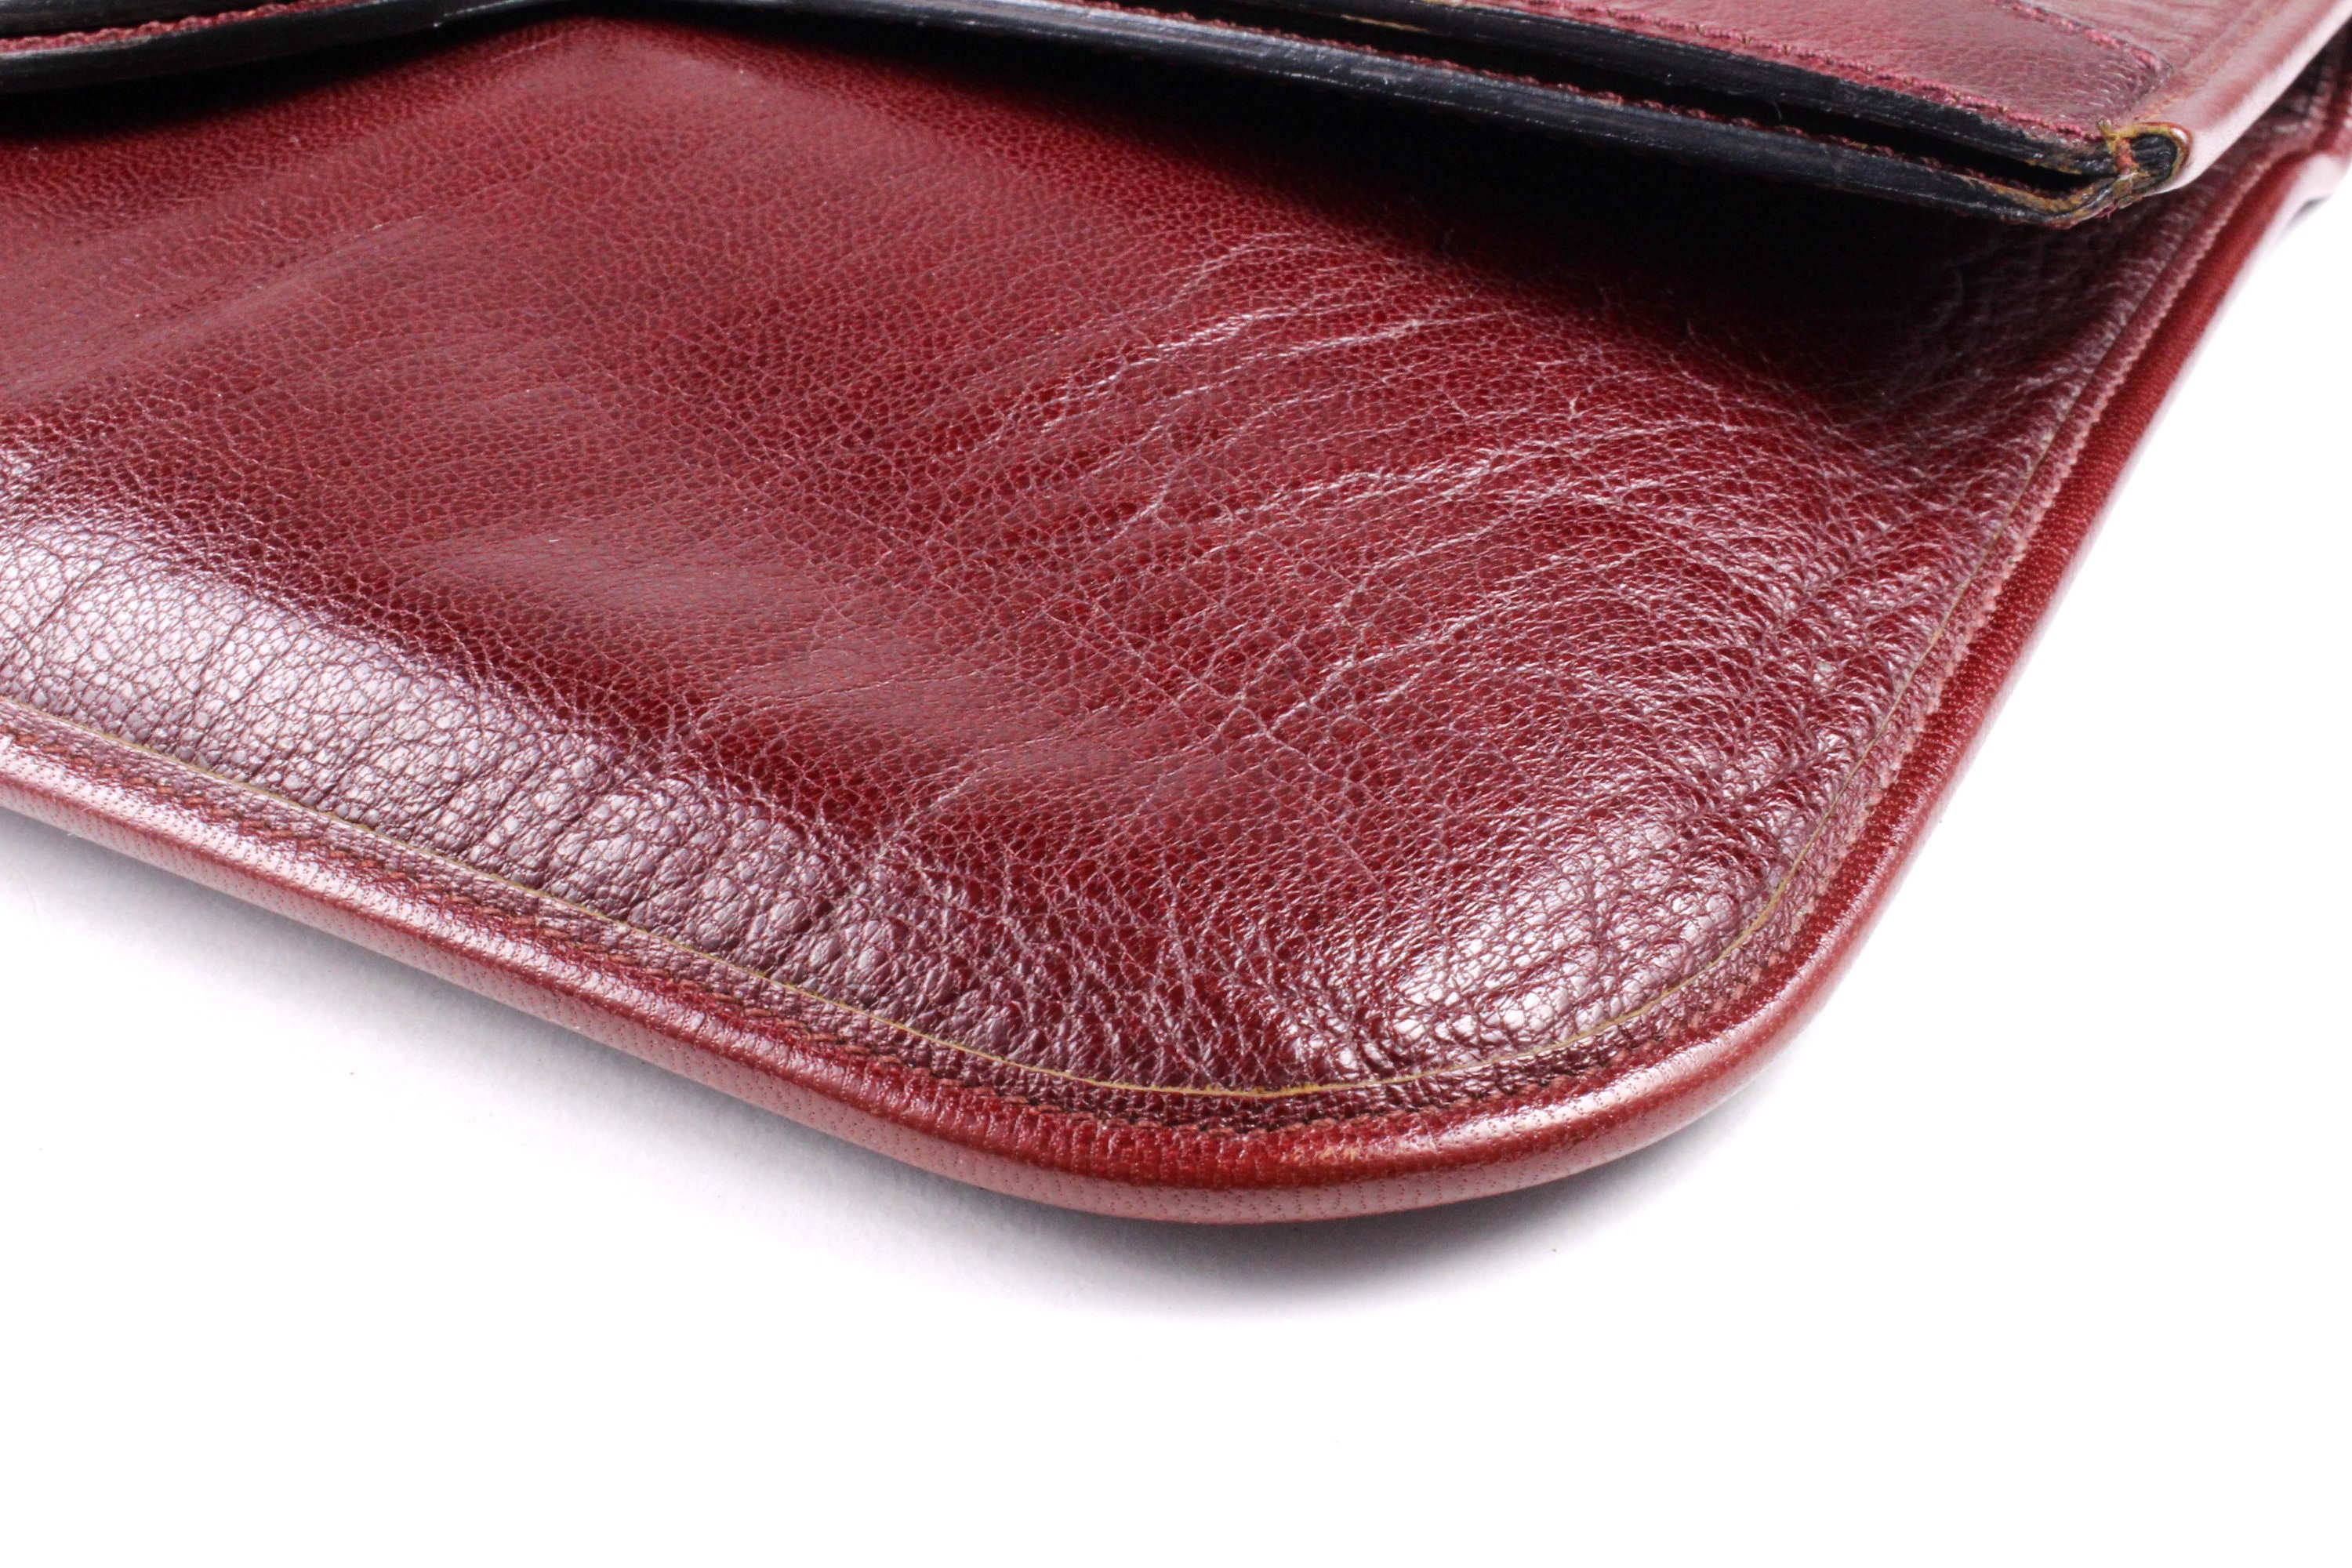 Brown crocodile skin handbag with flap and decorative clasp – Vintage Carwen